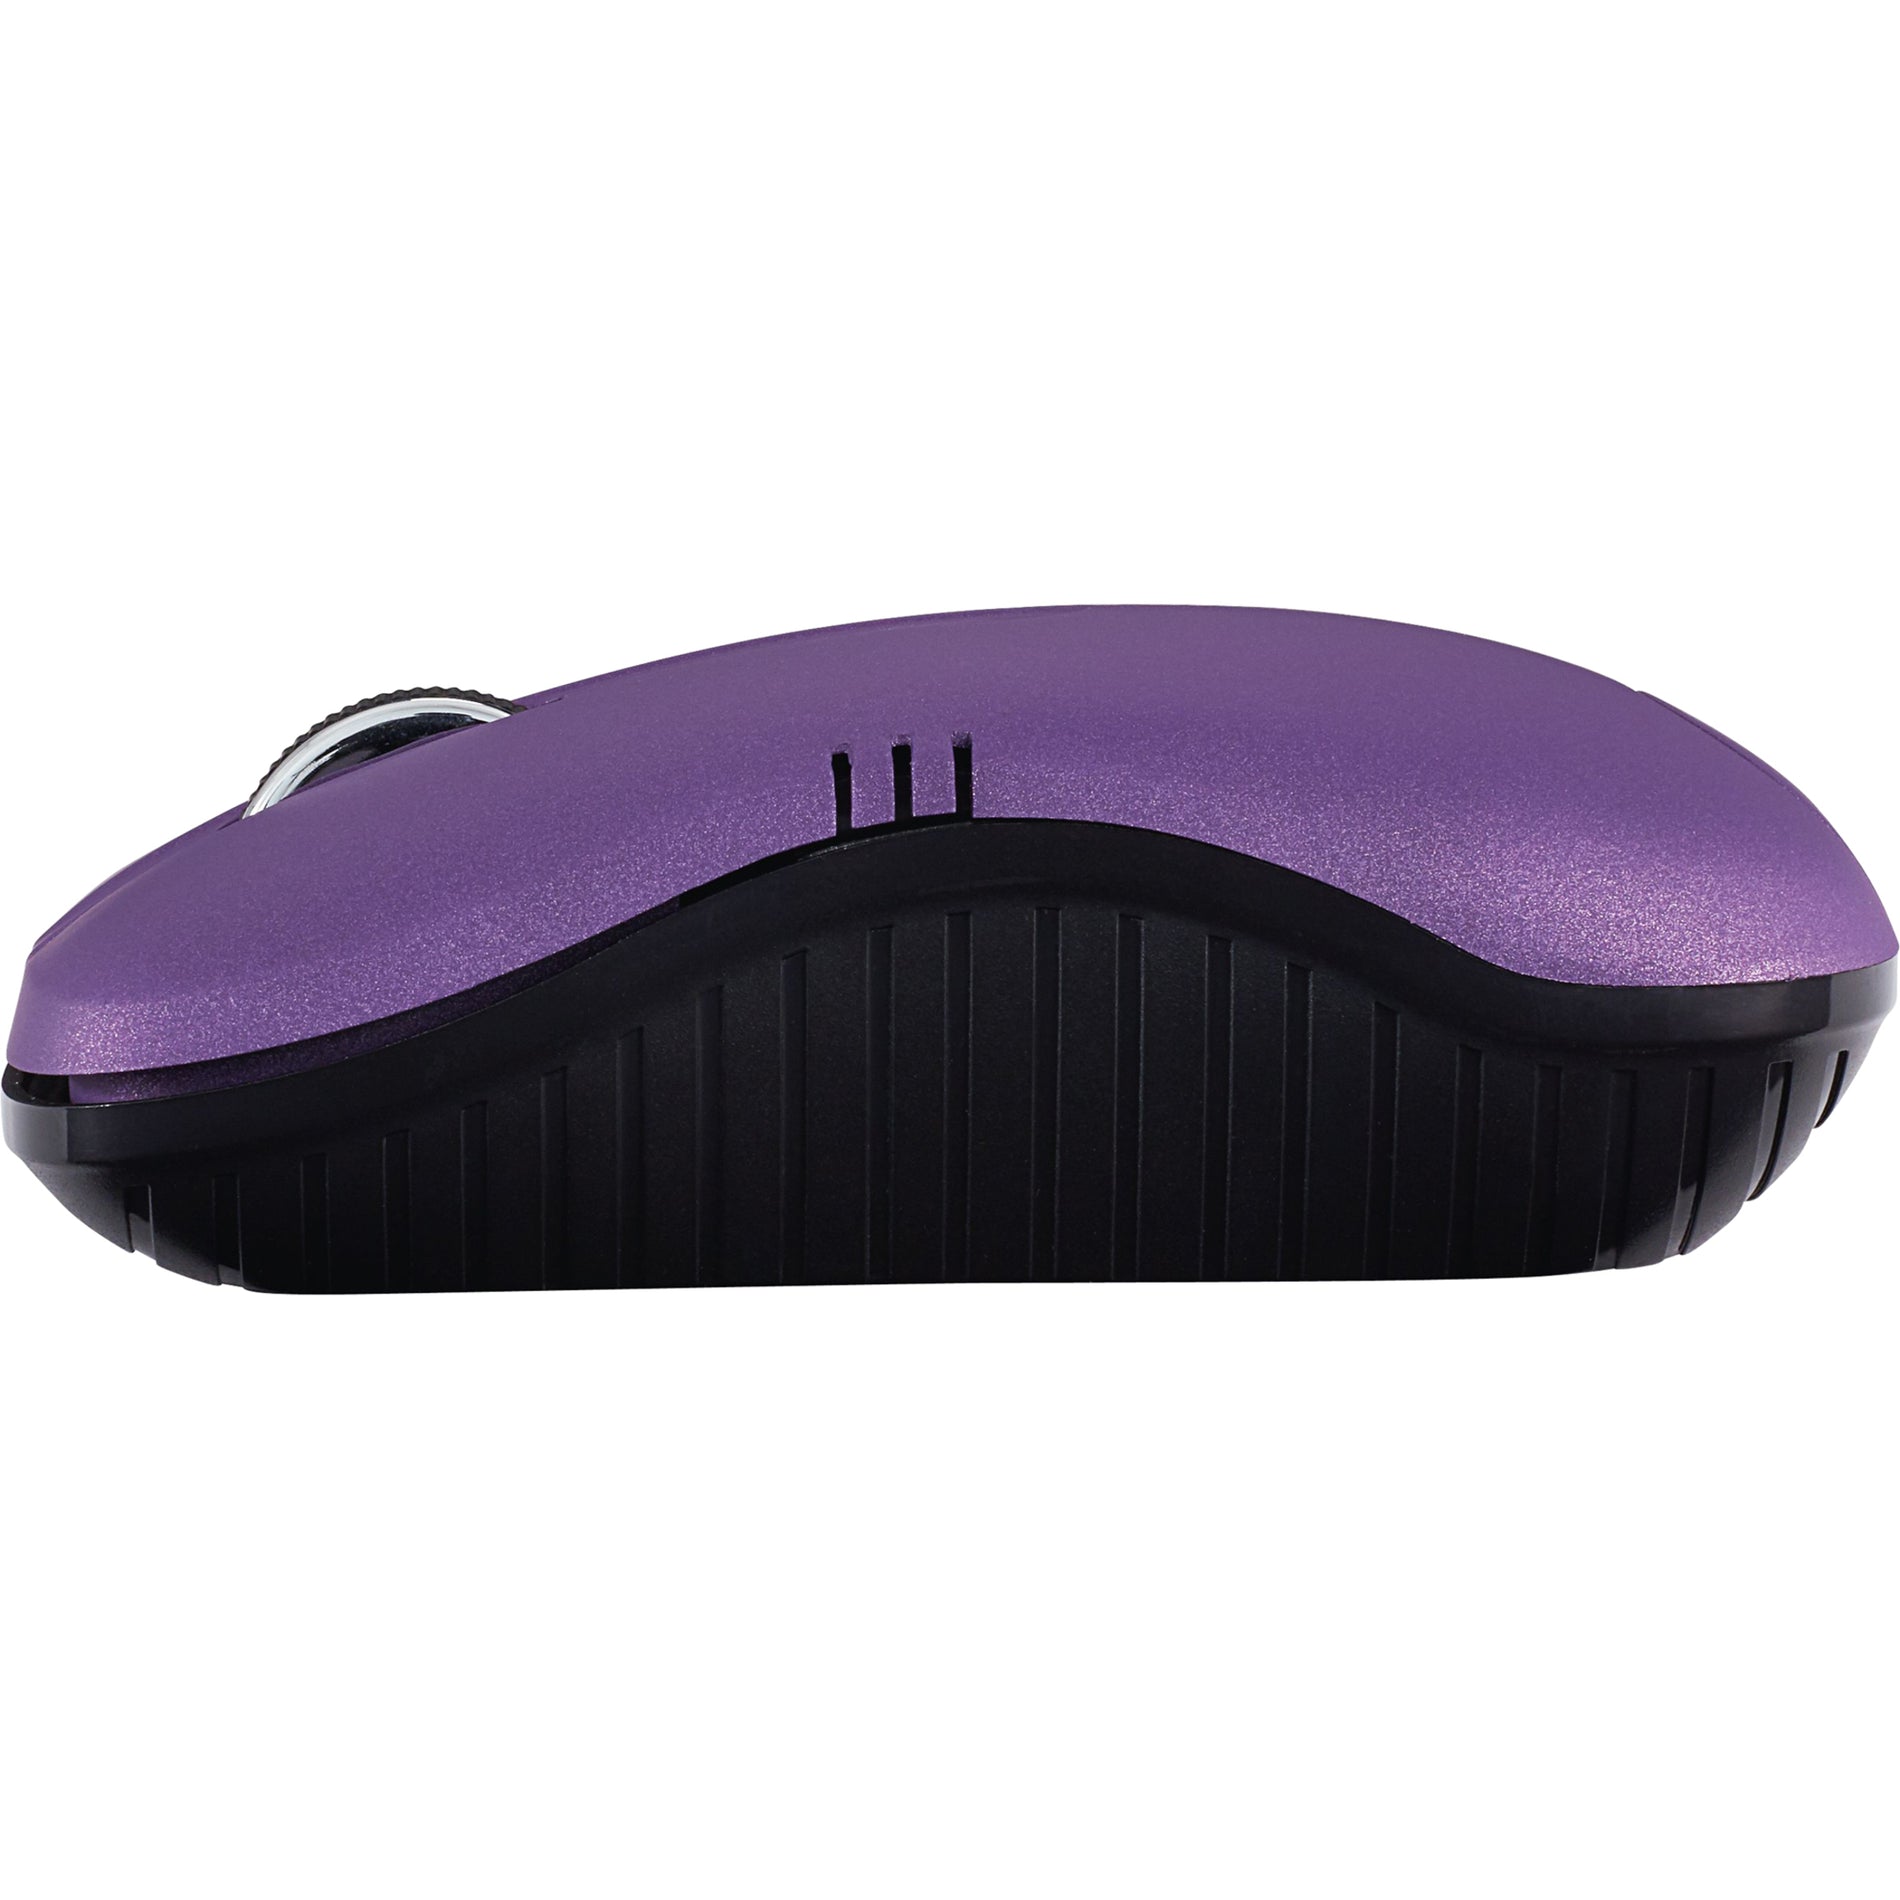 Verbatim 99781 Commuter Mouse, Wireless Notebook Optical Mouse, Matte Purple